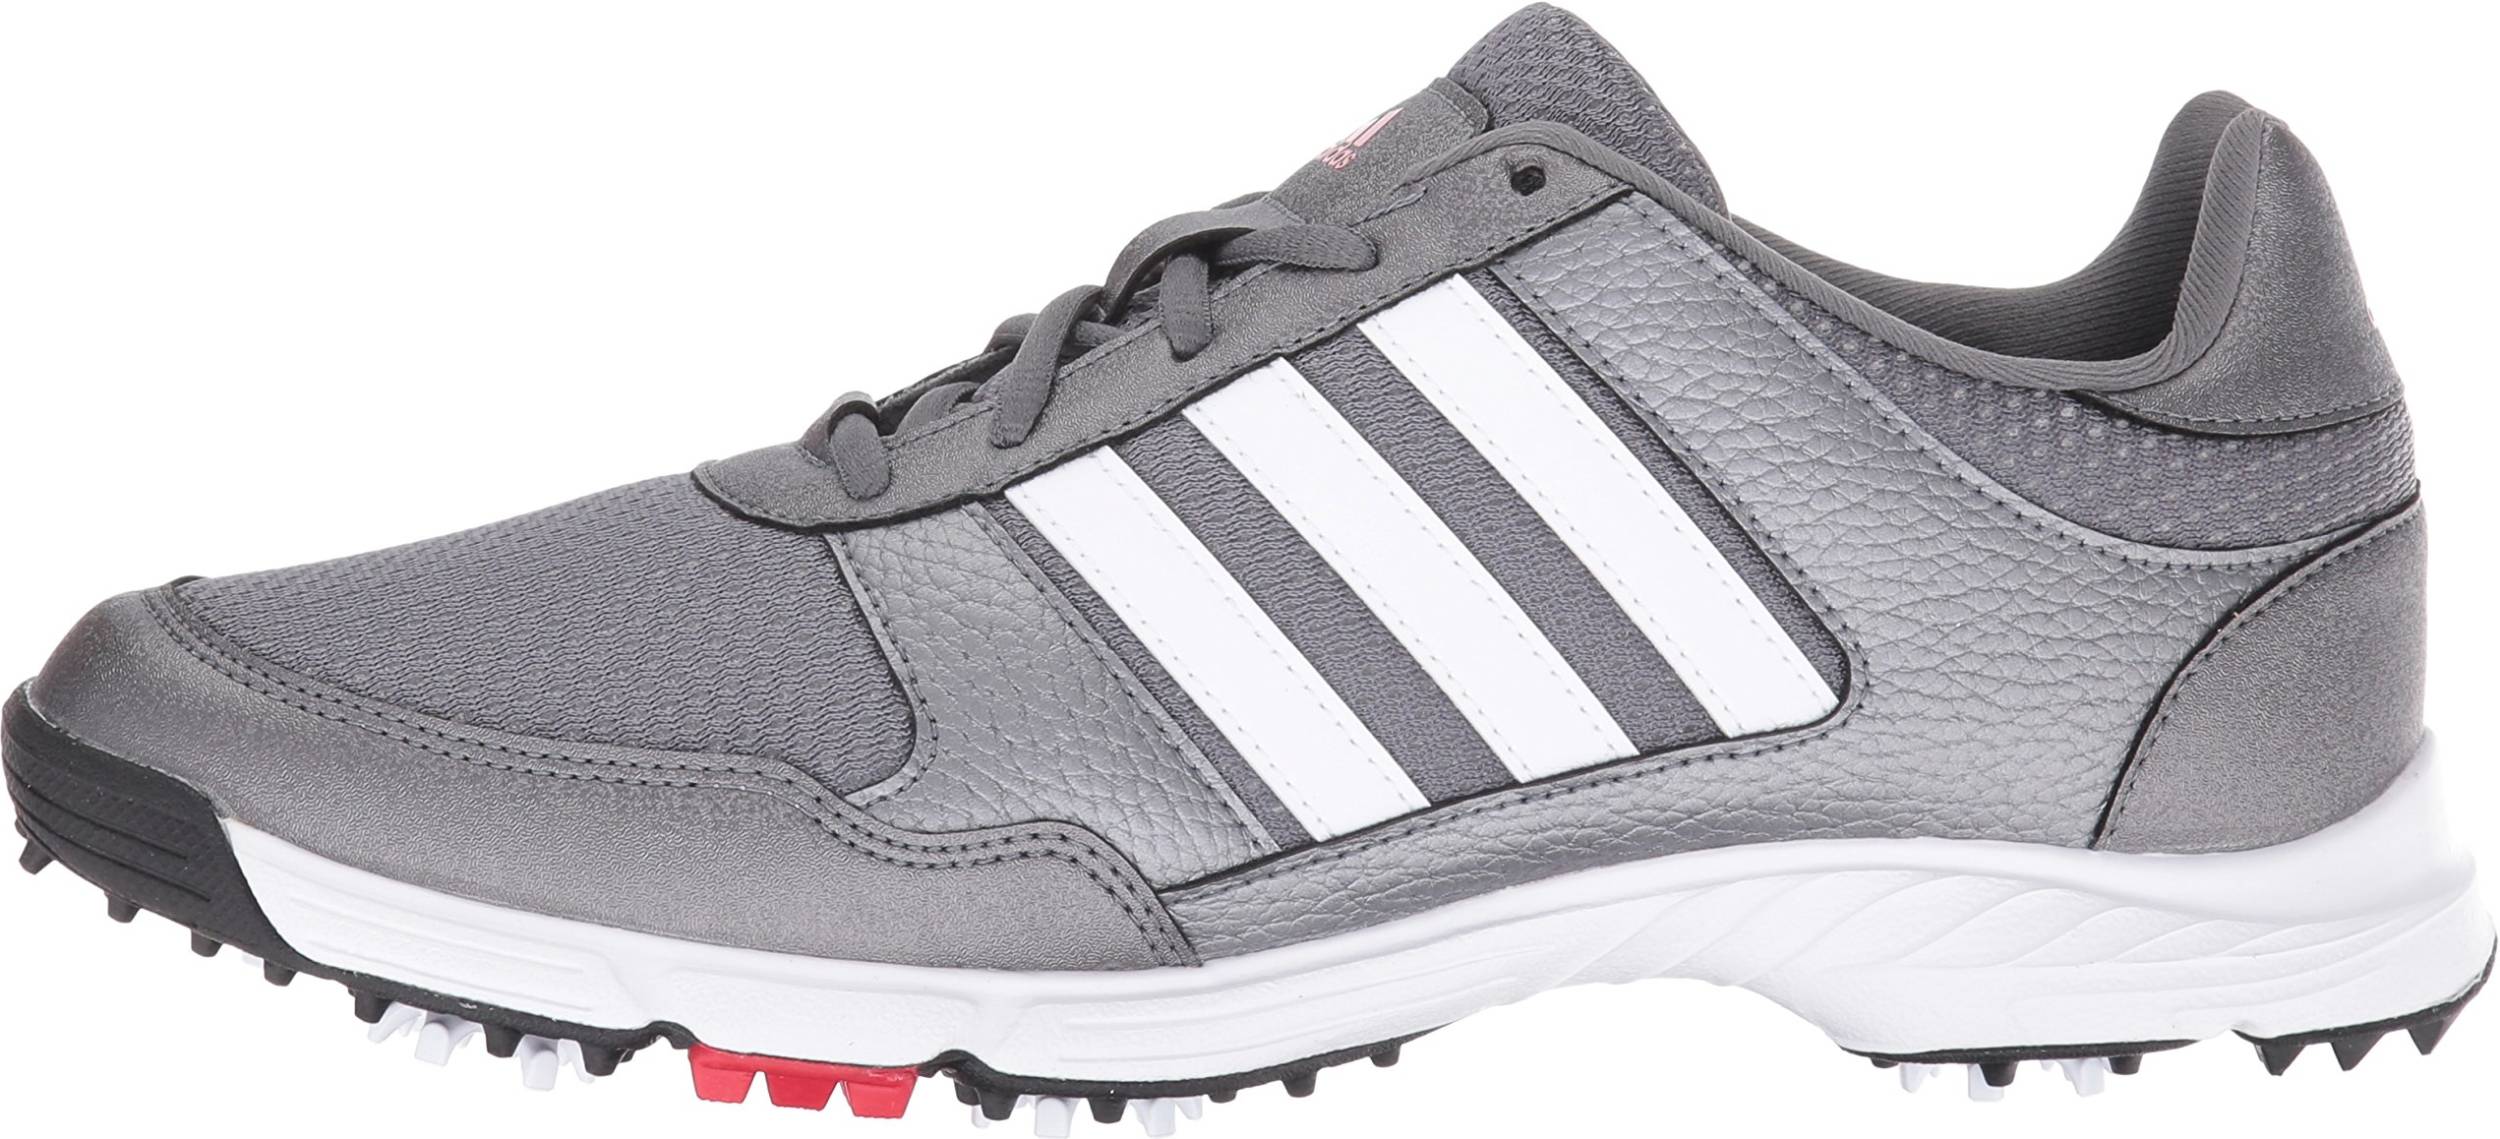 adidas golf tech response shoes